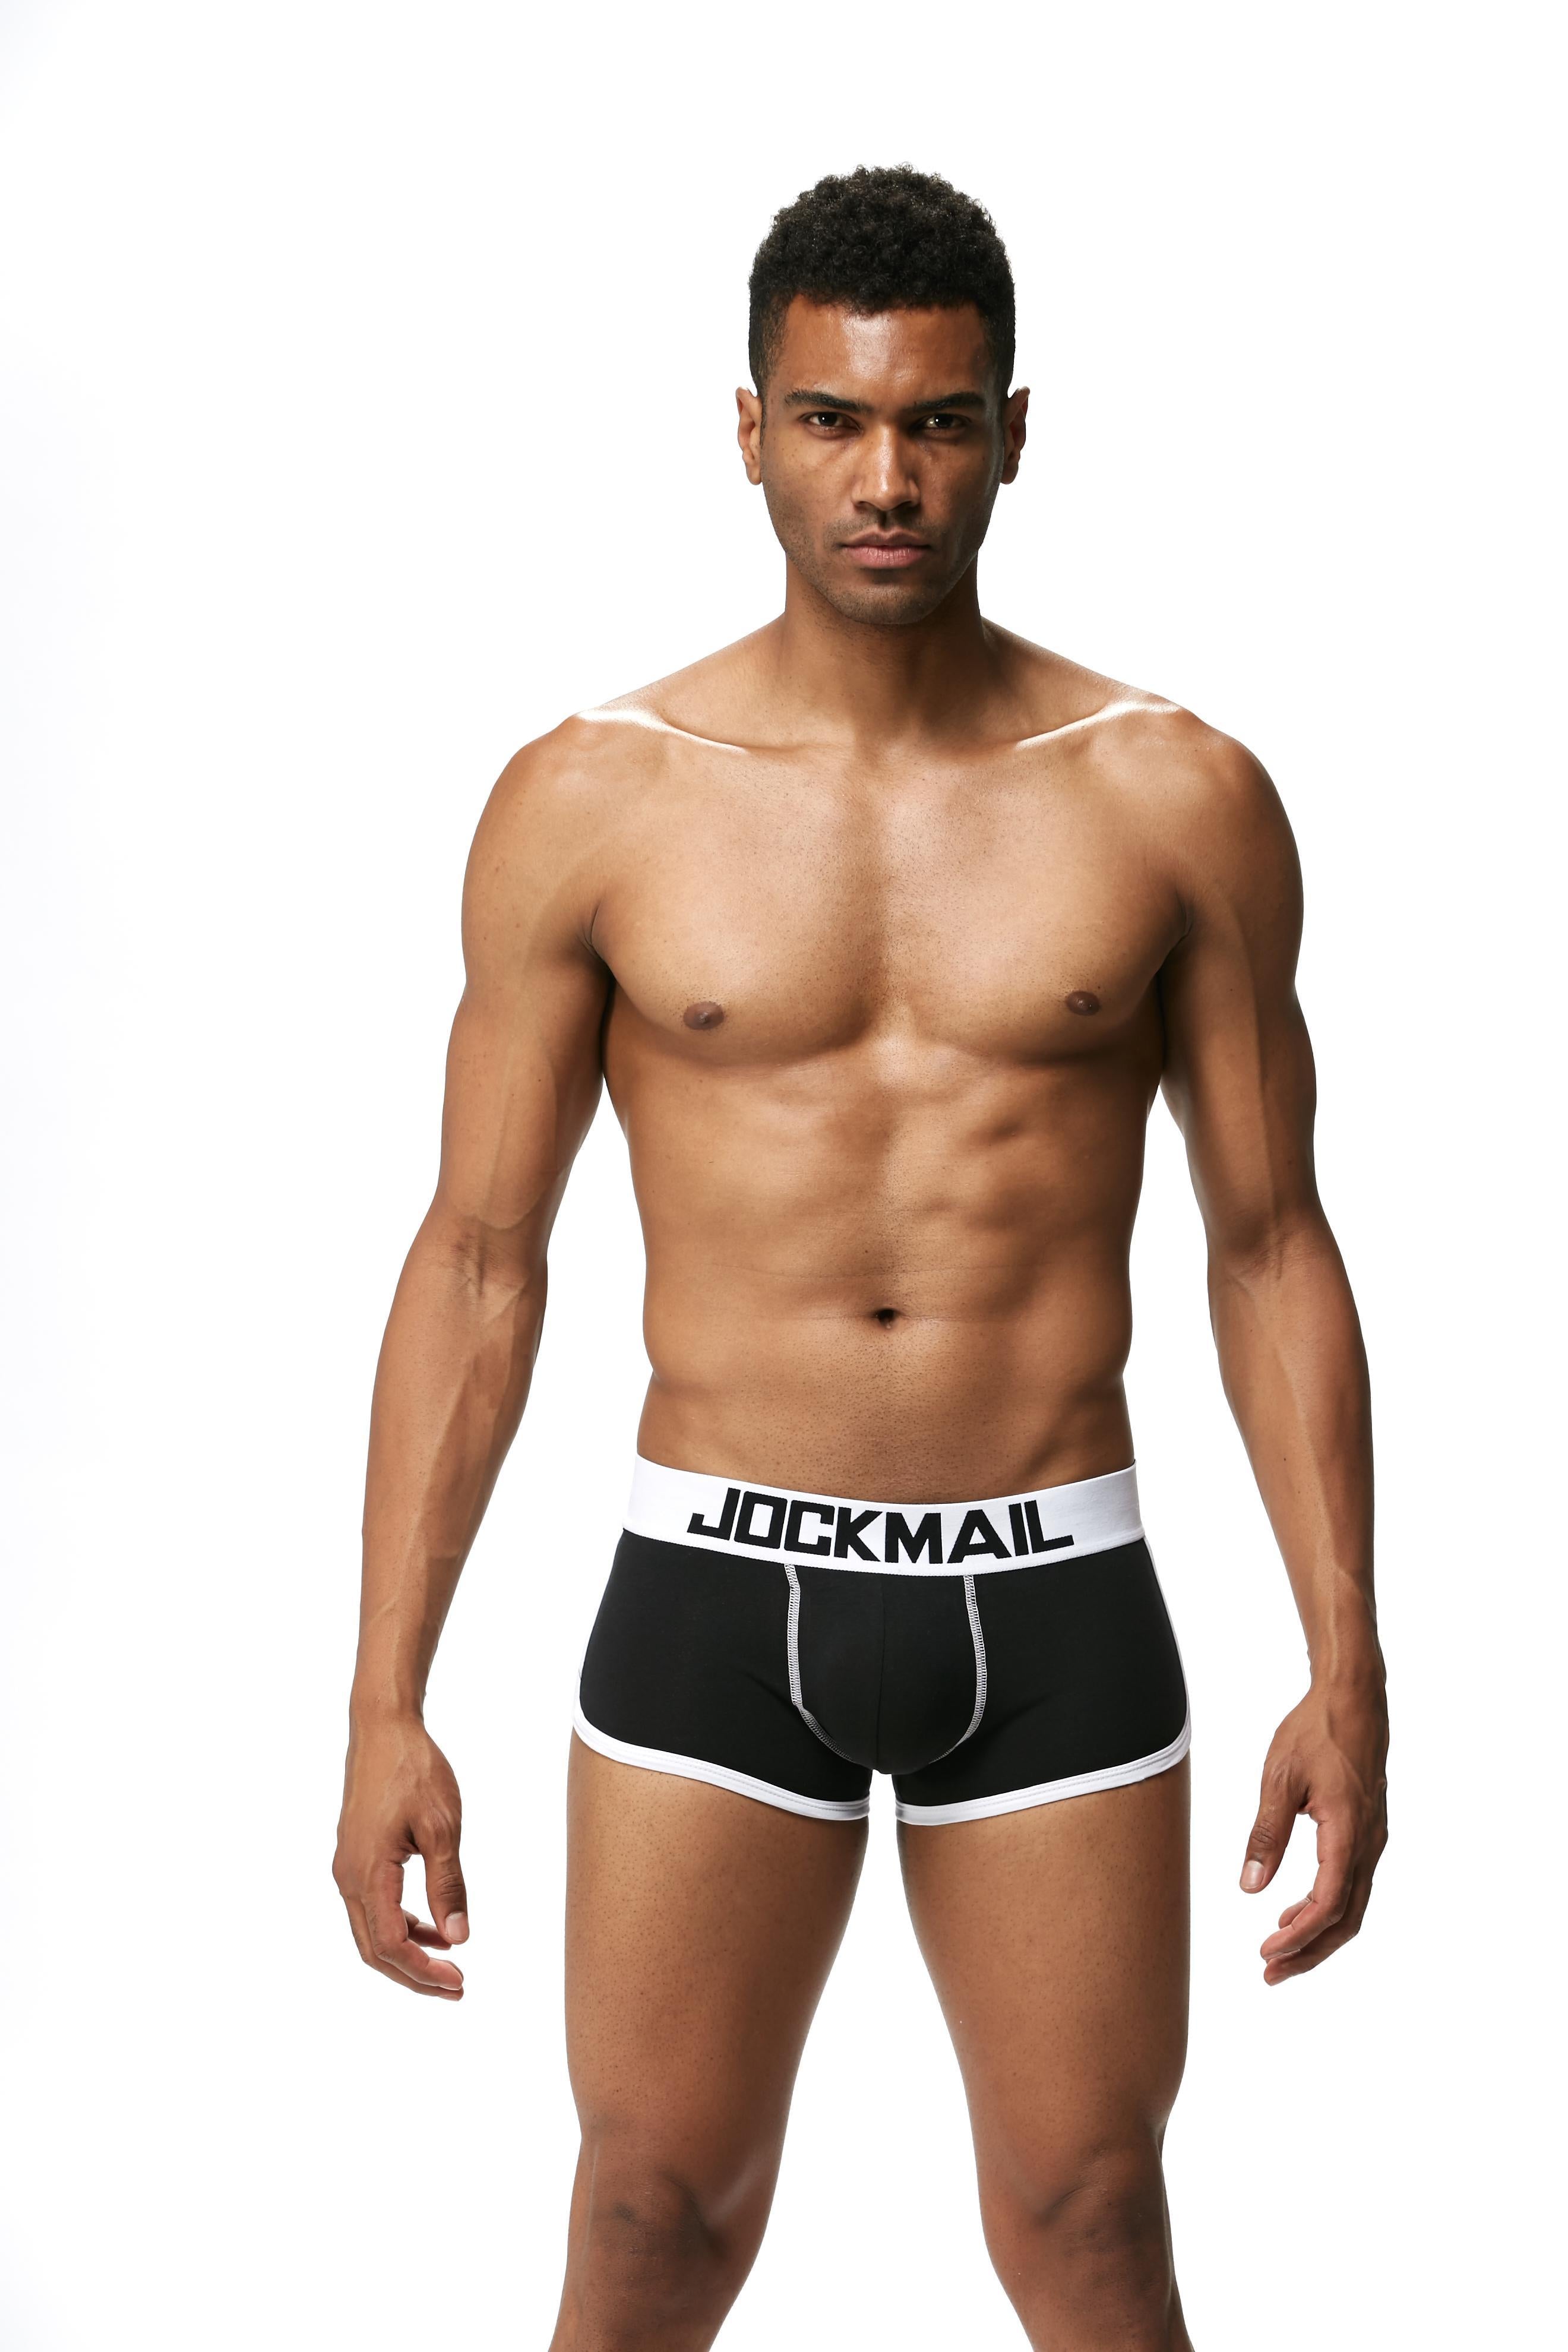 Jockmail Sexy Boxer Men Underwear Mens Butt Enhancing Padded Trunk